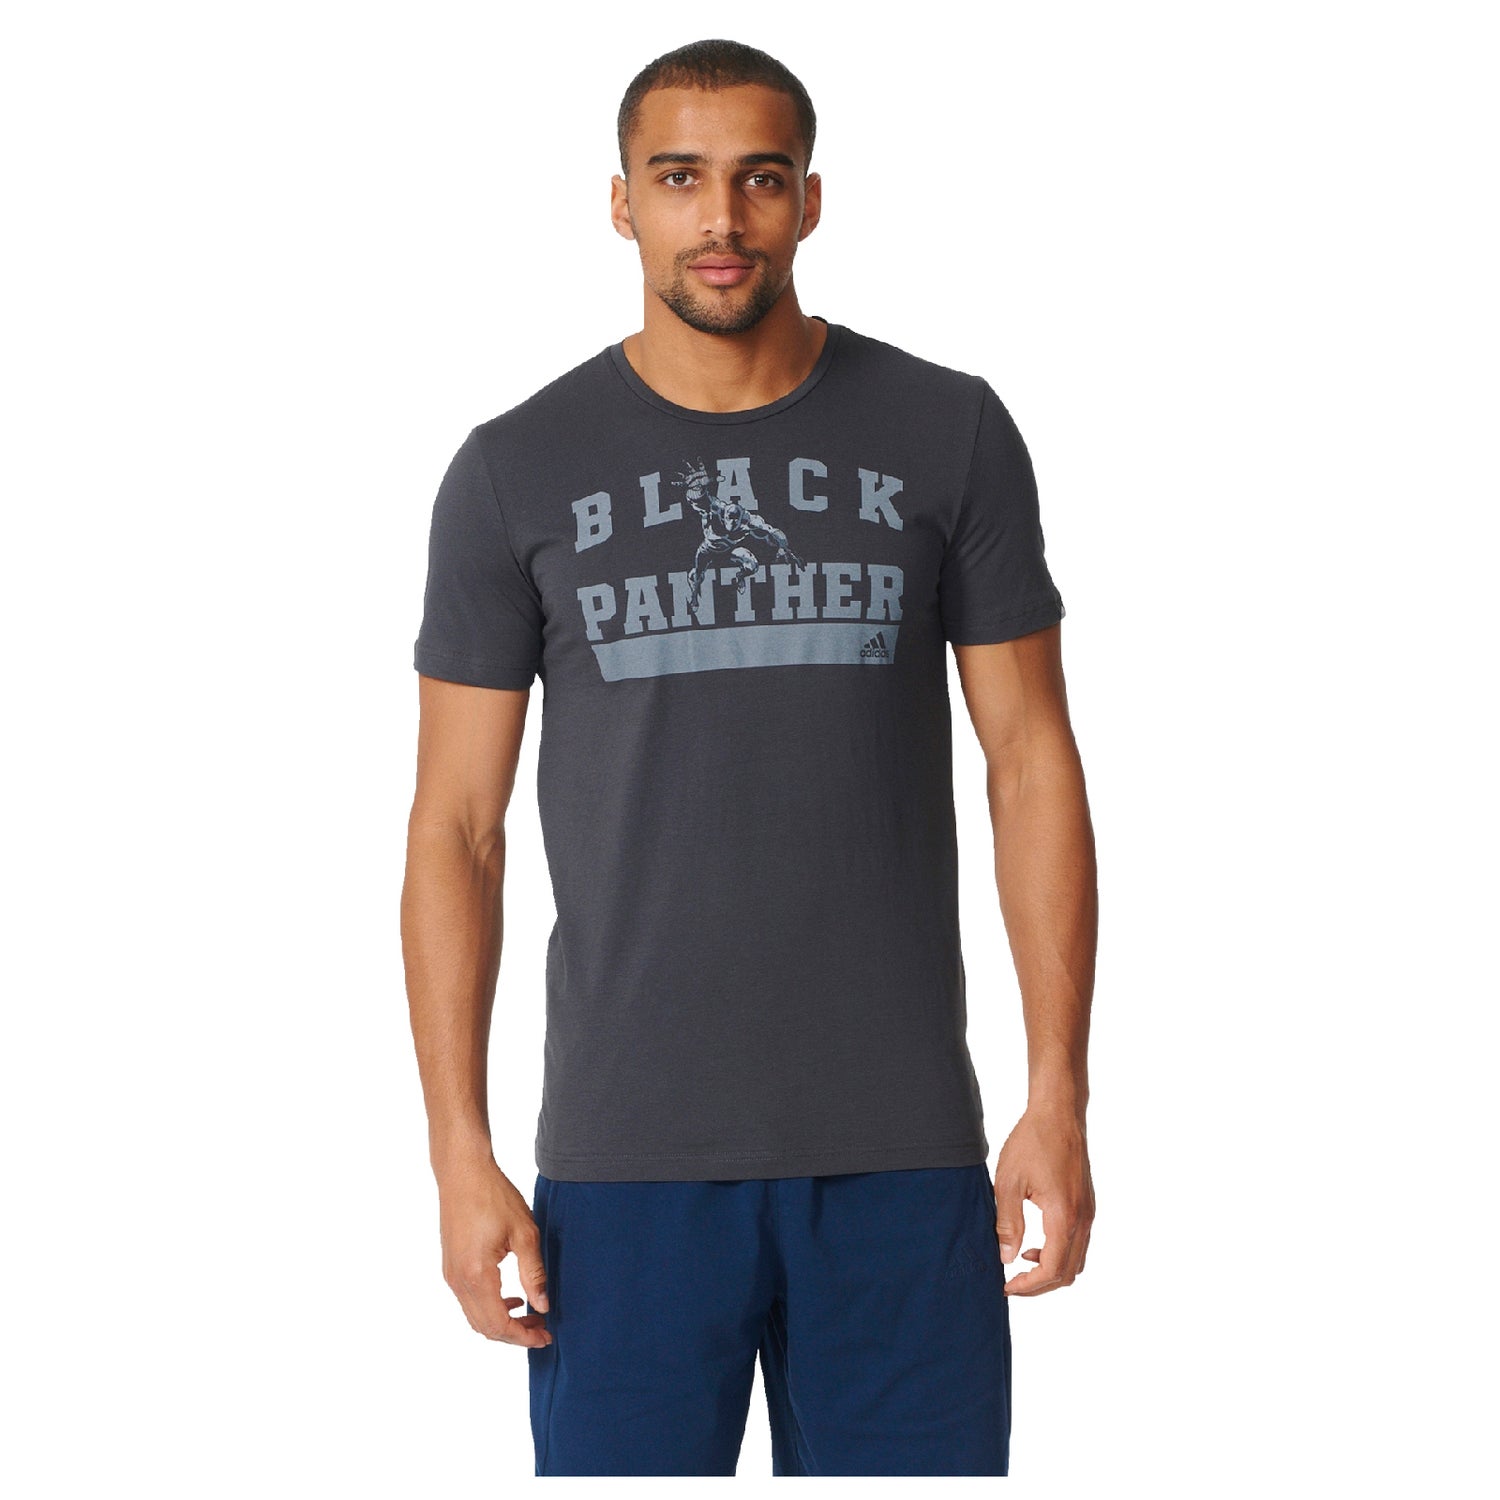 adidas Men's Black Panther Training T-Shirt - Black | TheHut.com